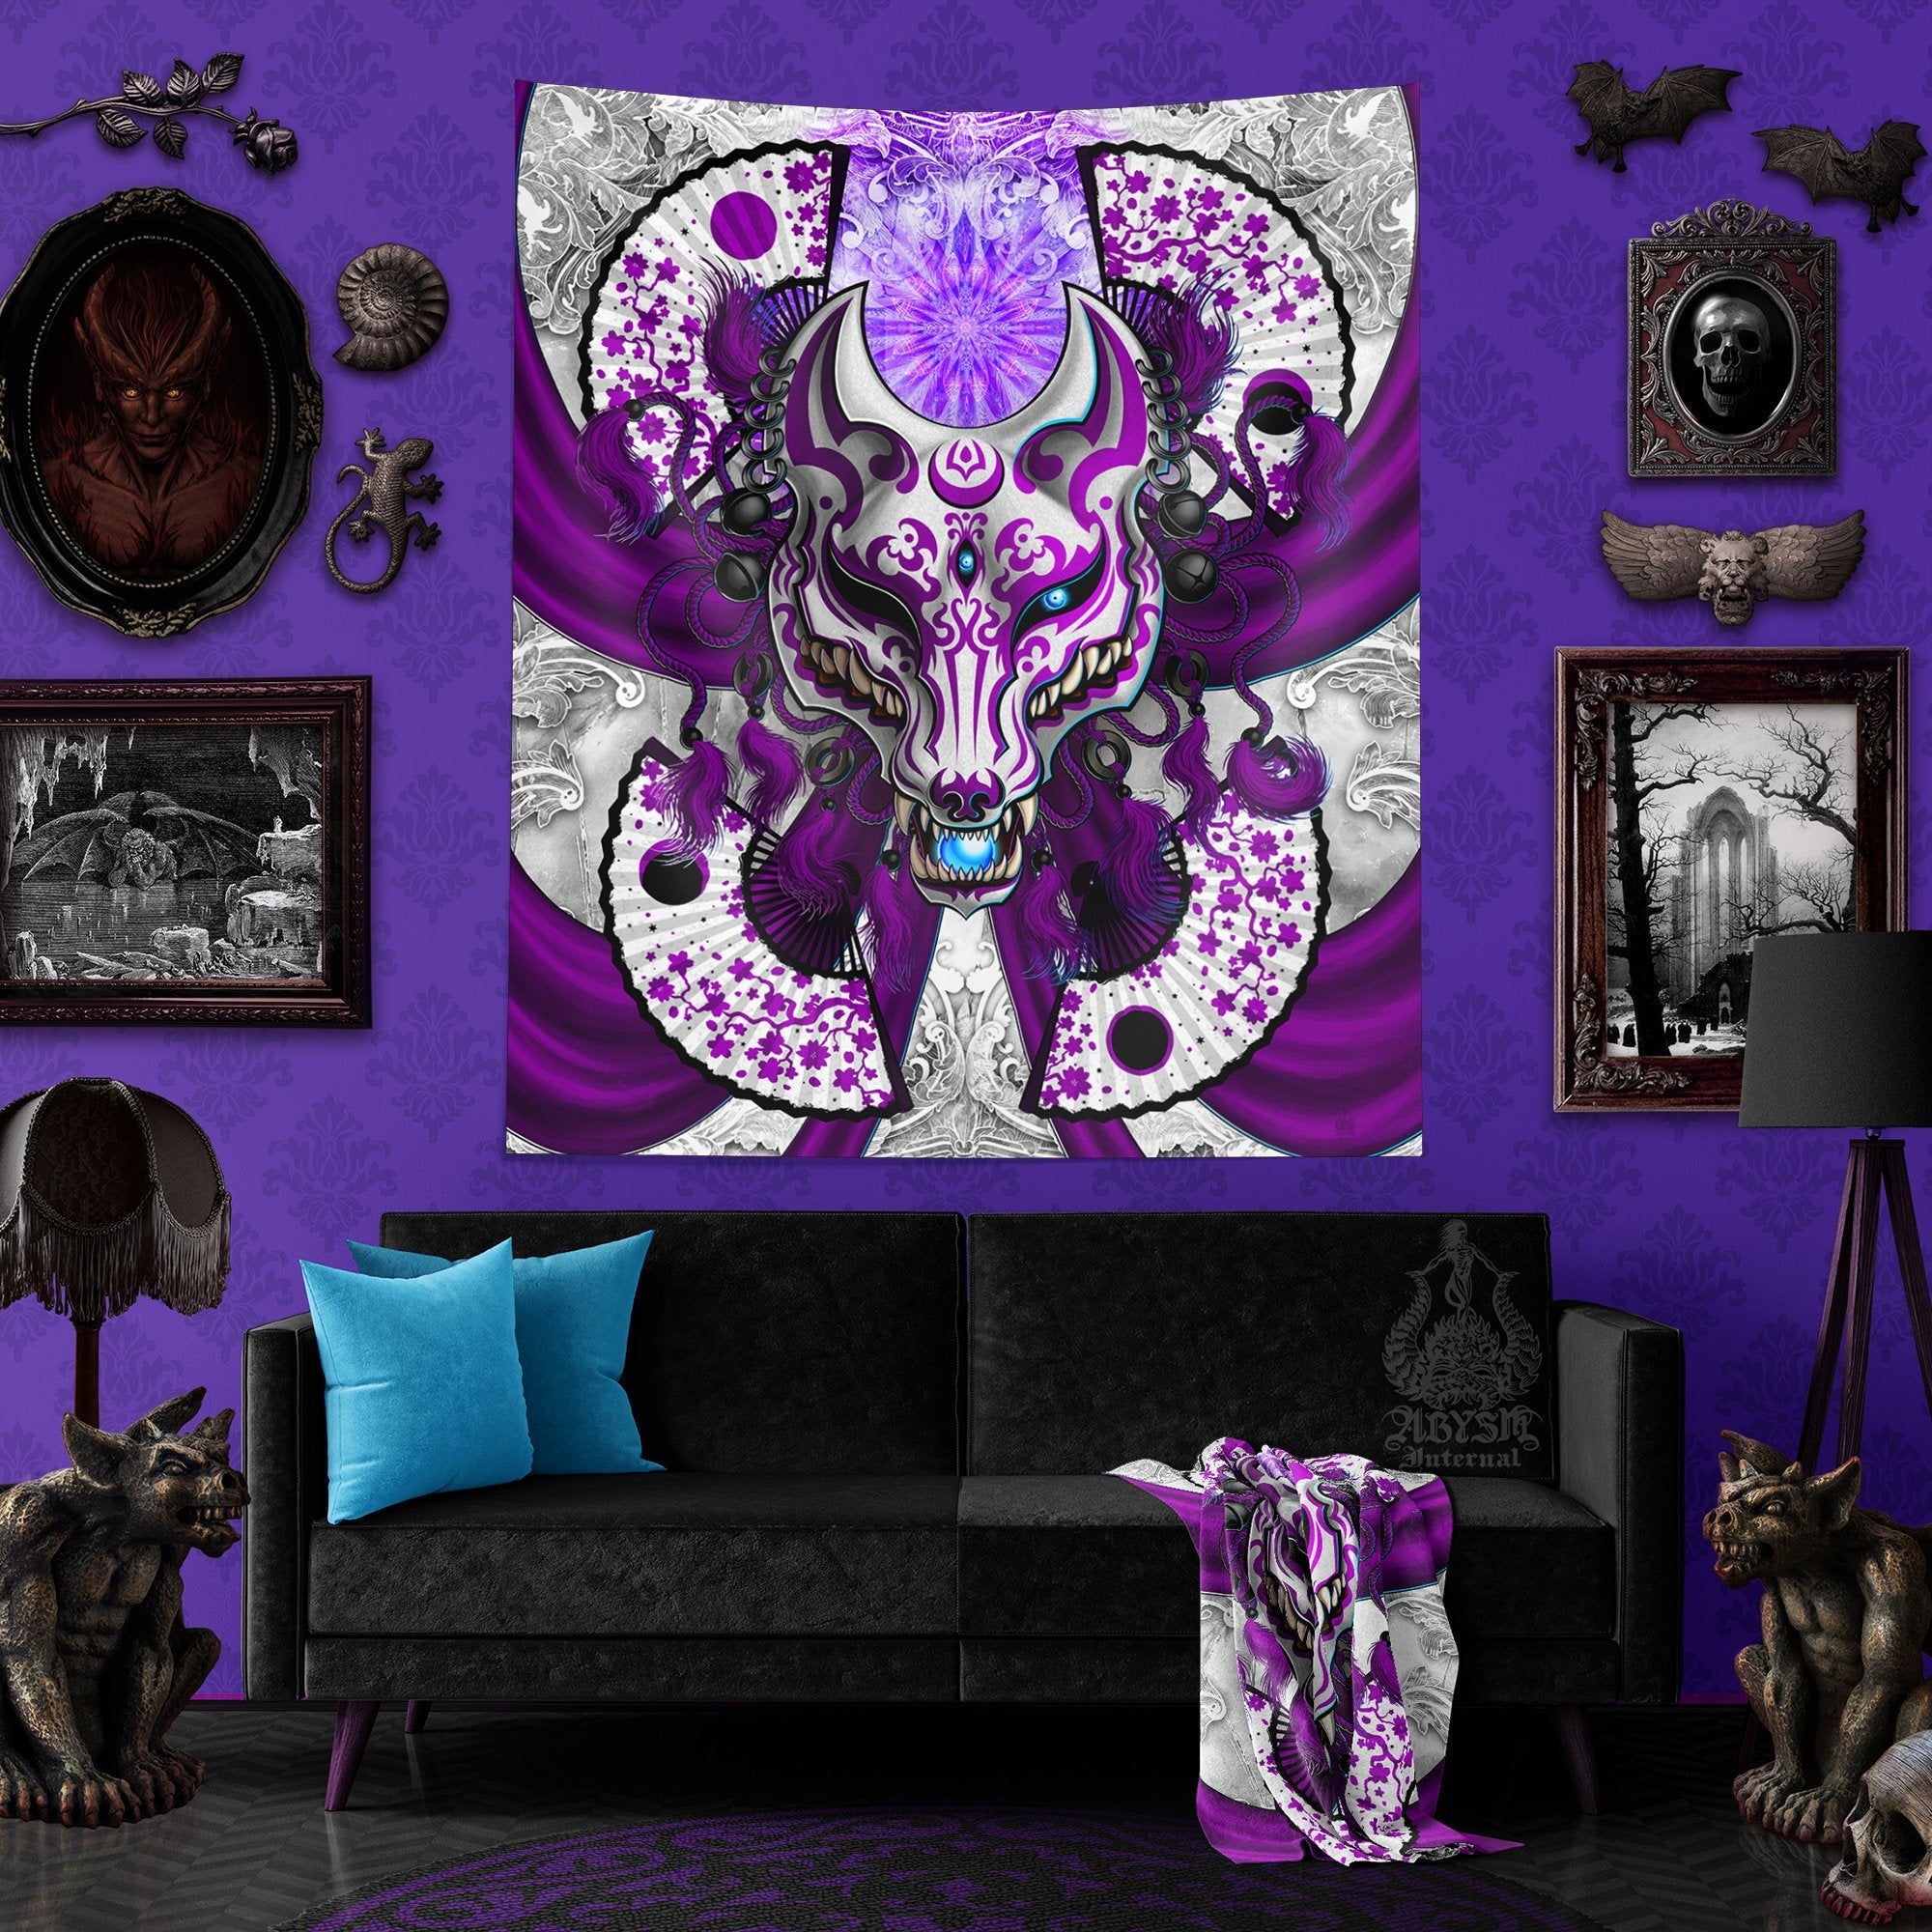 Pastel Goth Tapestry, Japanese Wall Hanging, Anime and Gamer Home Decor, Art Print, Okami, Kitsune Mask - White & Purple Fox - Abysm Internal